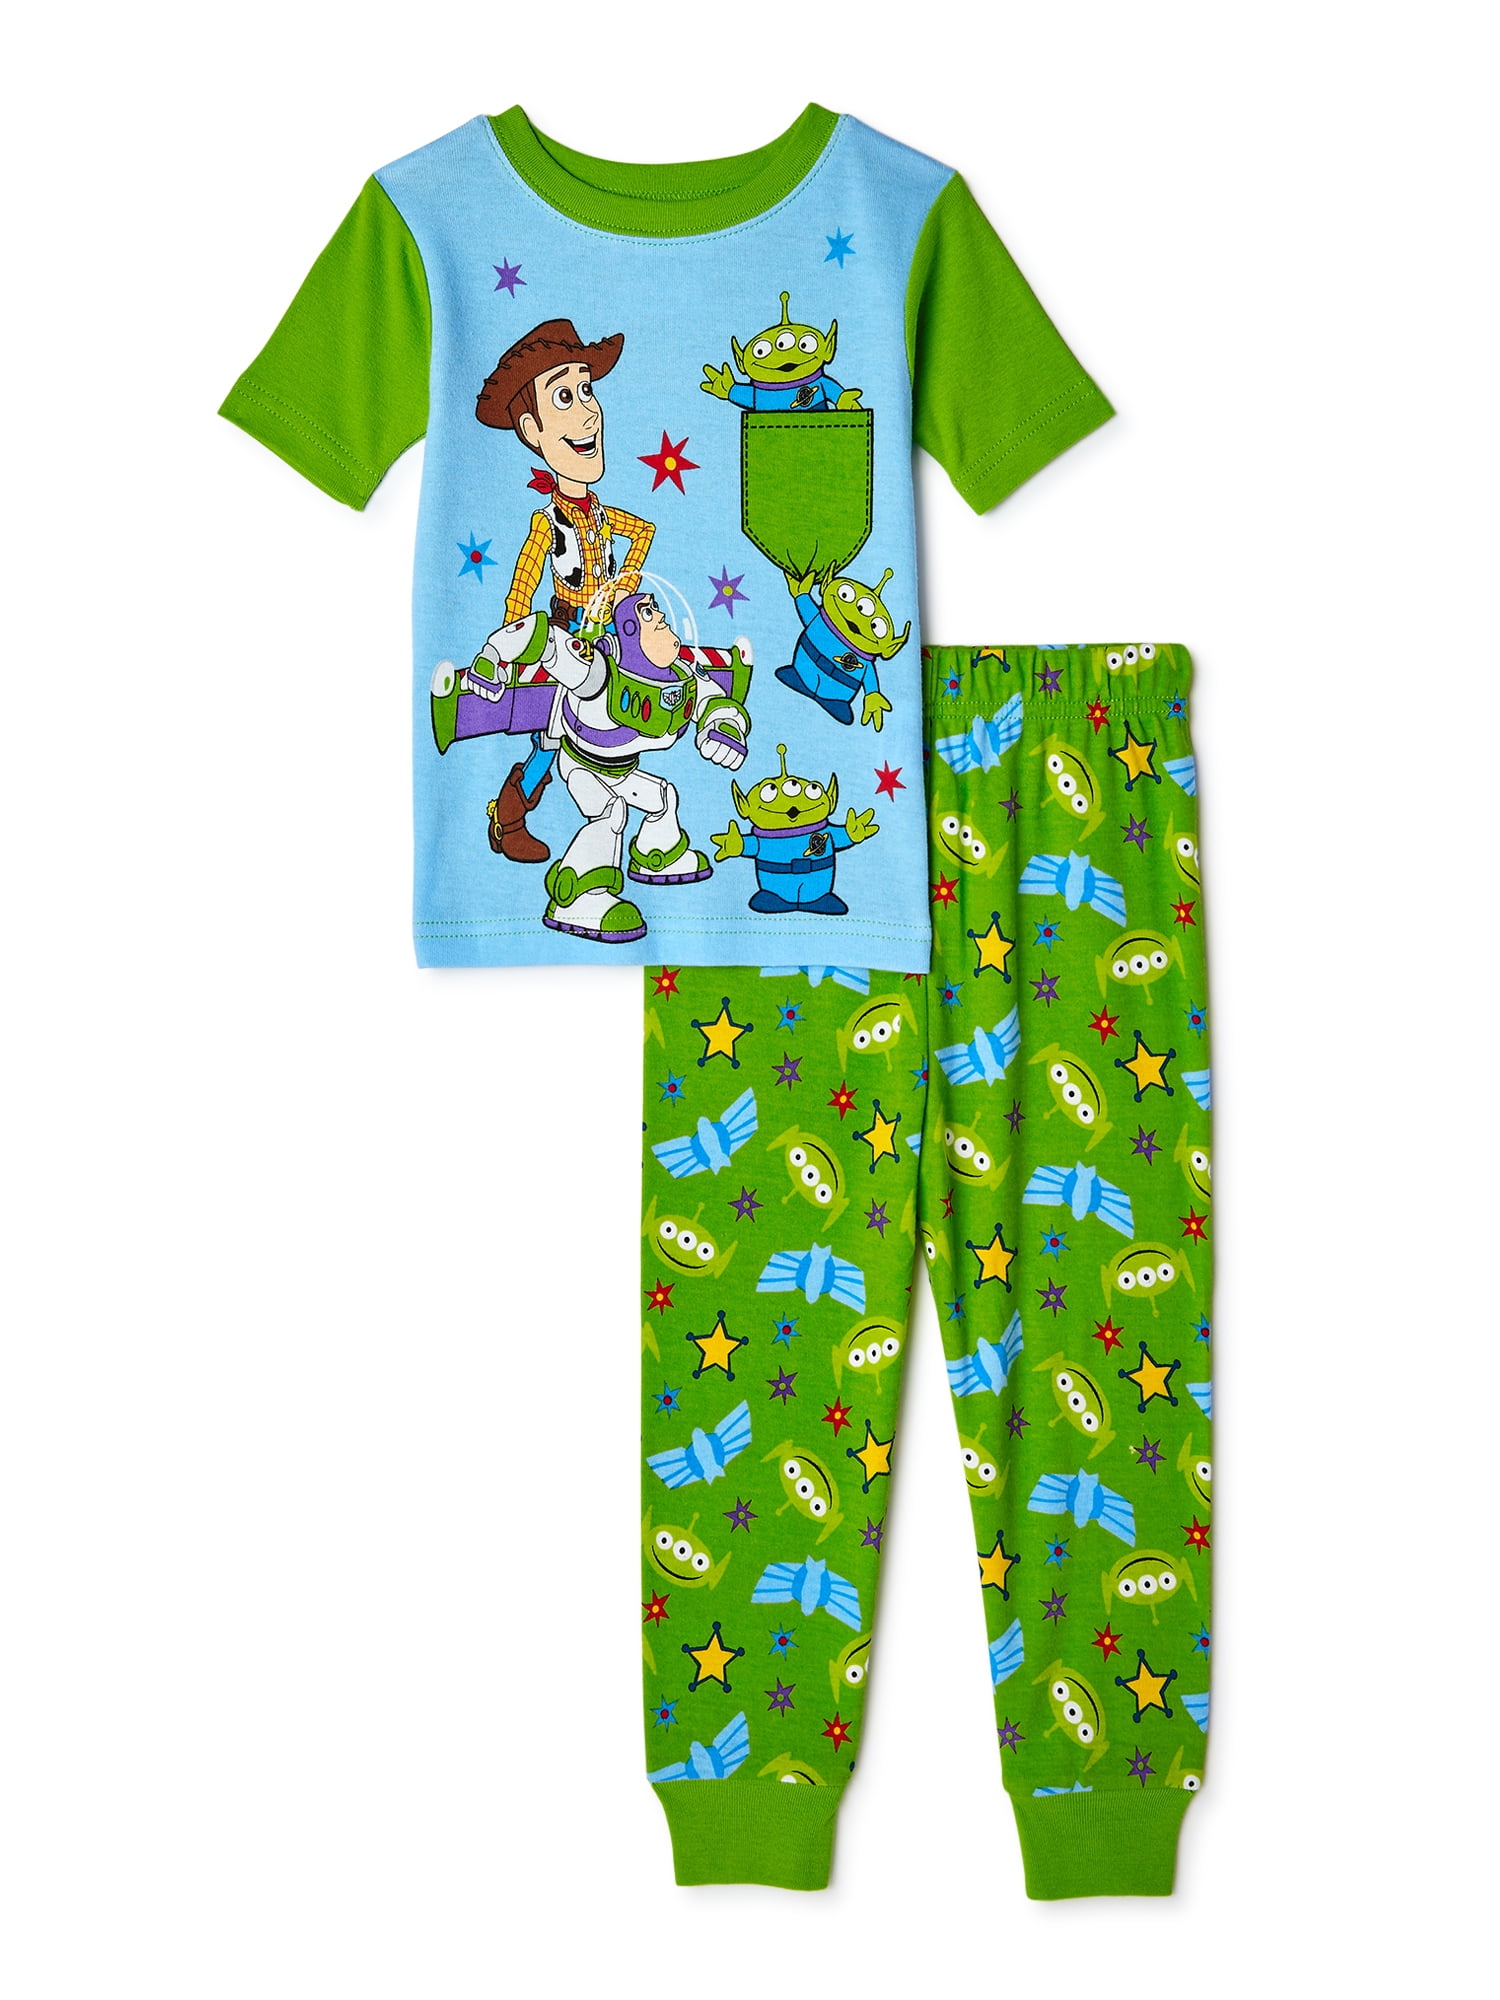 Details about   2PCS/SET Kids Boys Baby Buzz Lightyear Sleepwear Pj's Pajamas Matching Sets 1-8Y